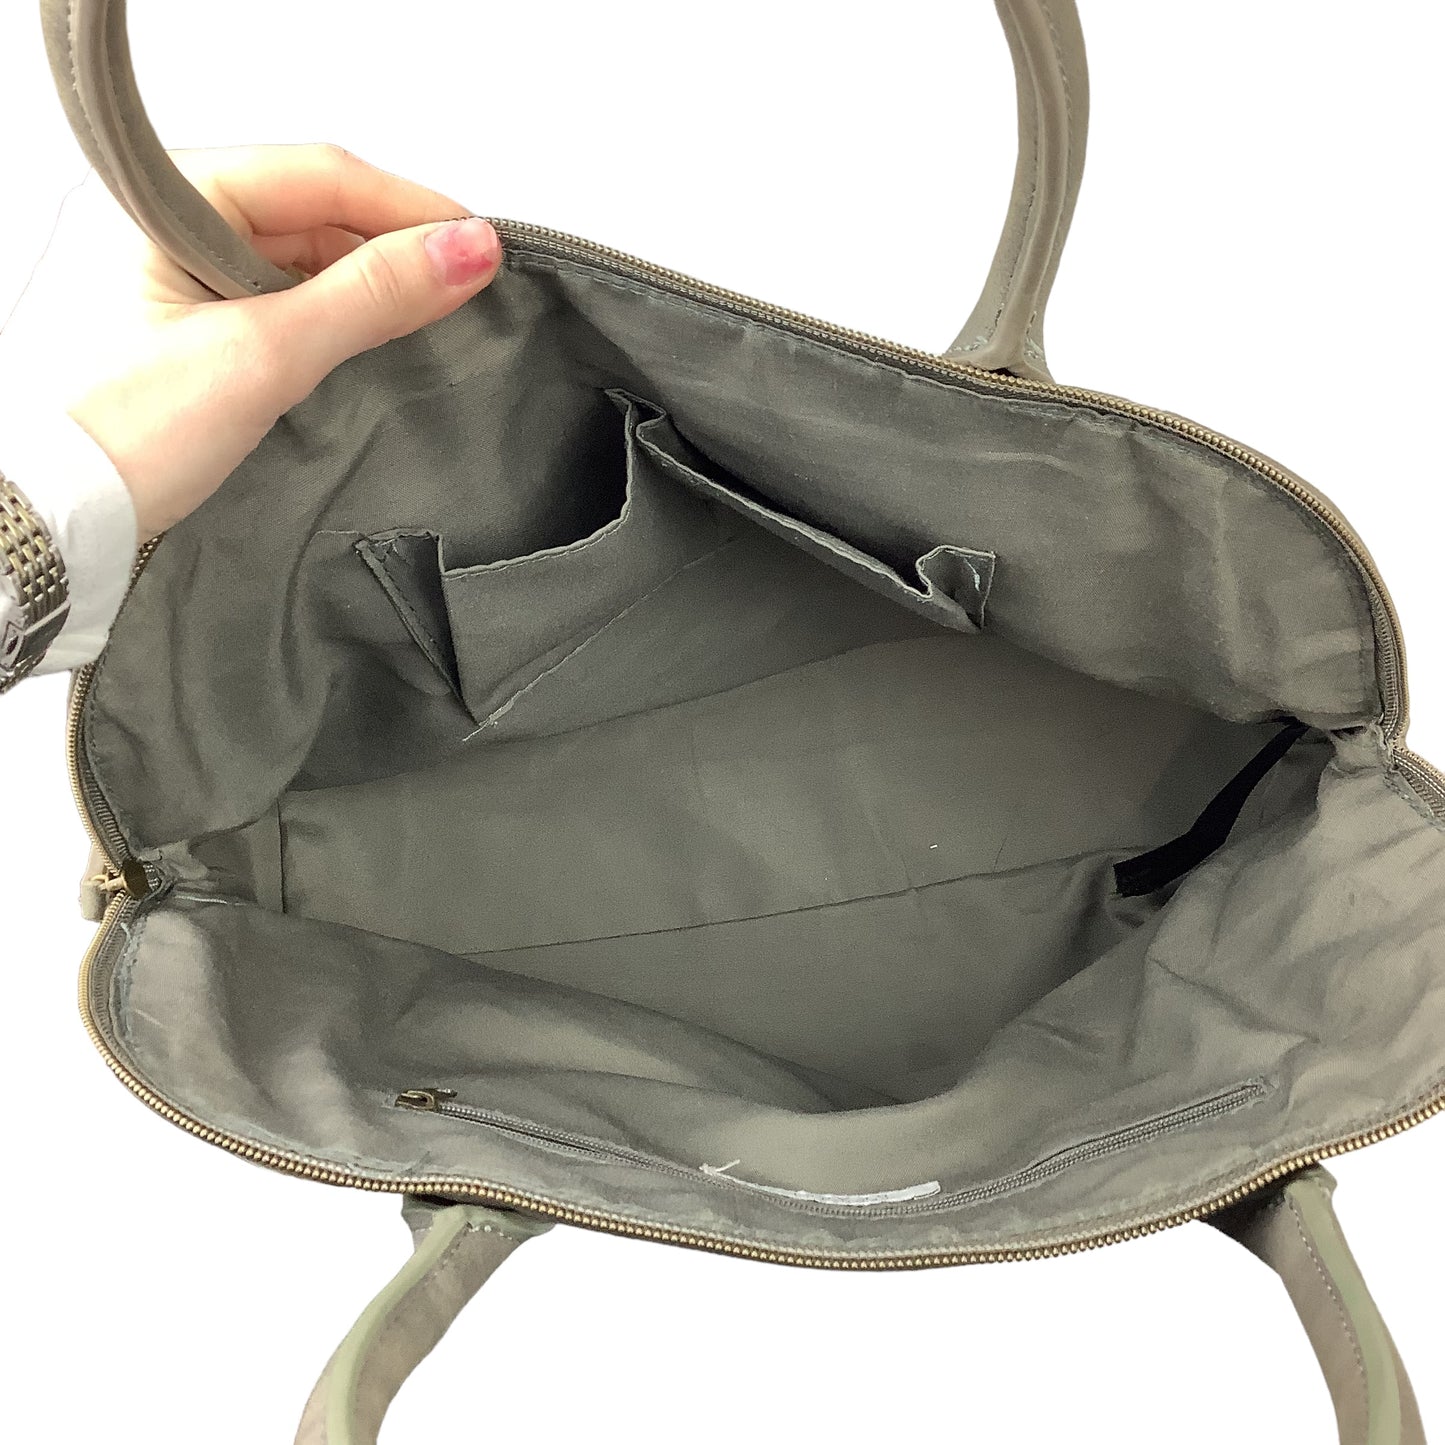 Handbag By Kenneth Cole  Size: Large